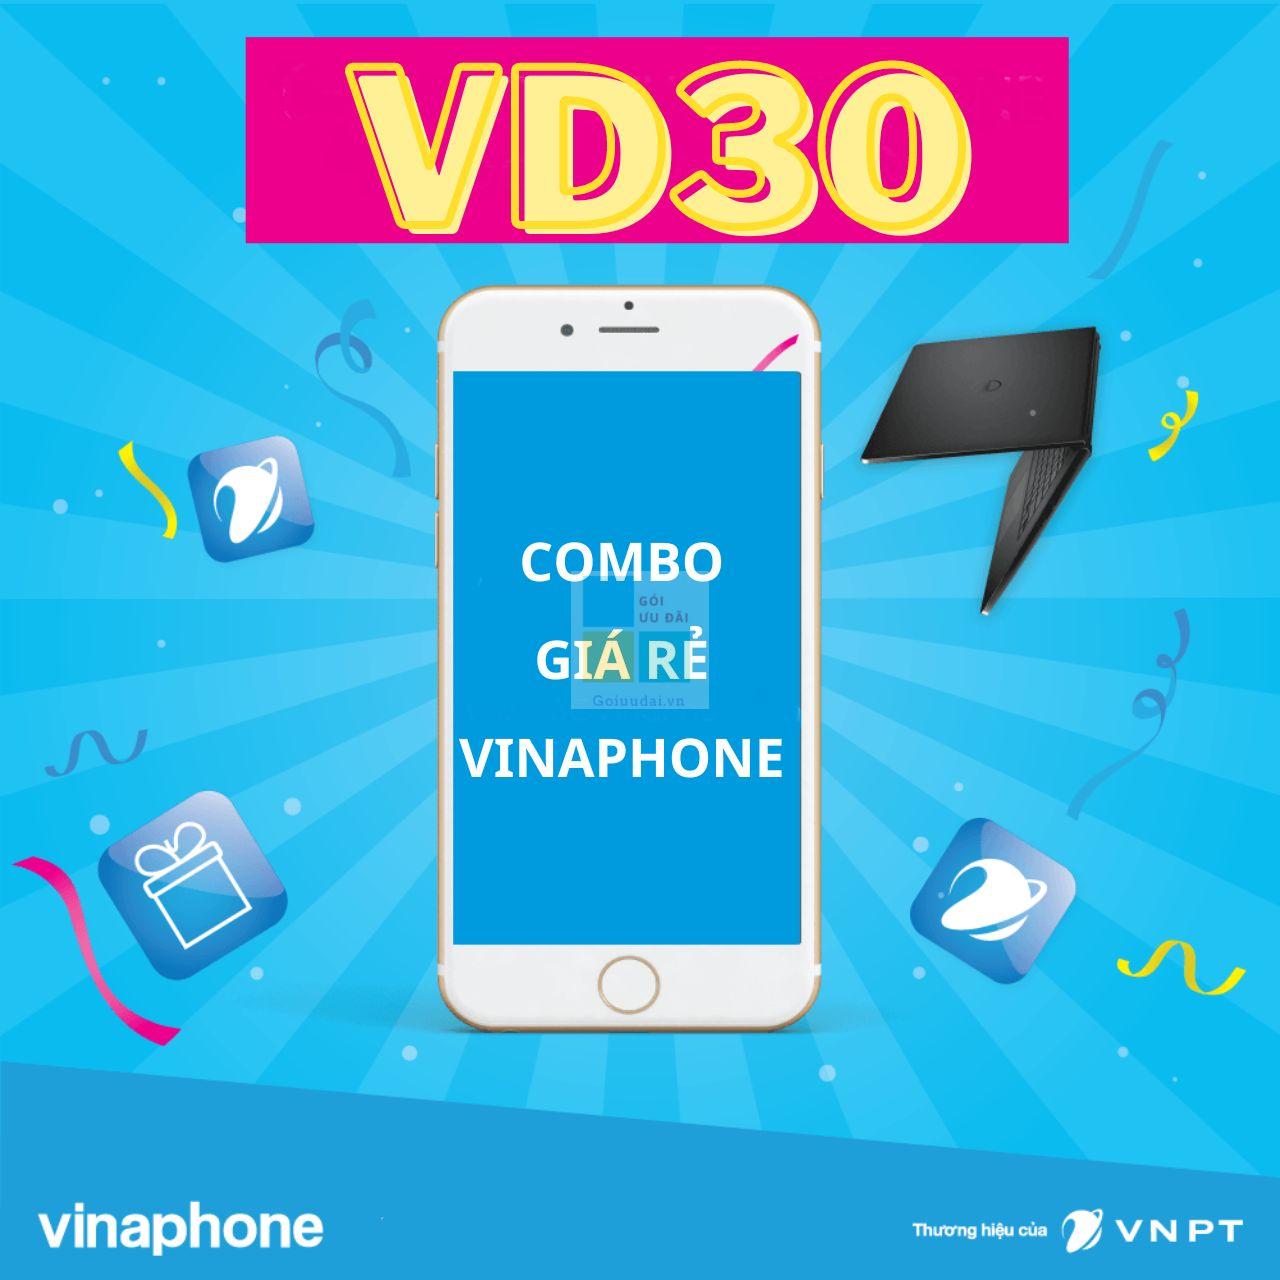 vd30 Vinaphone 